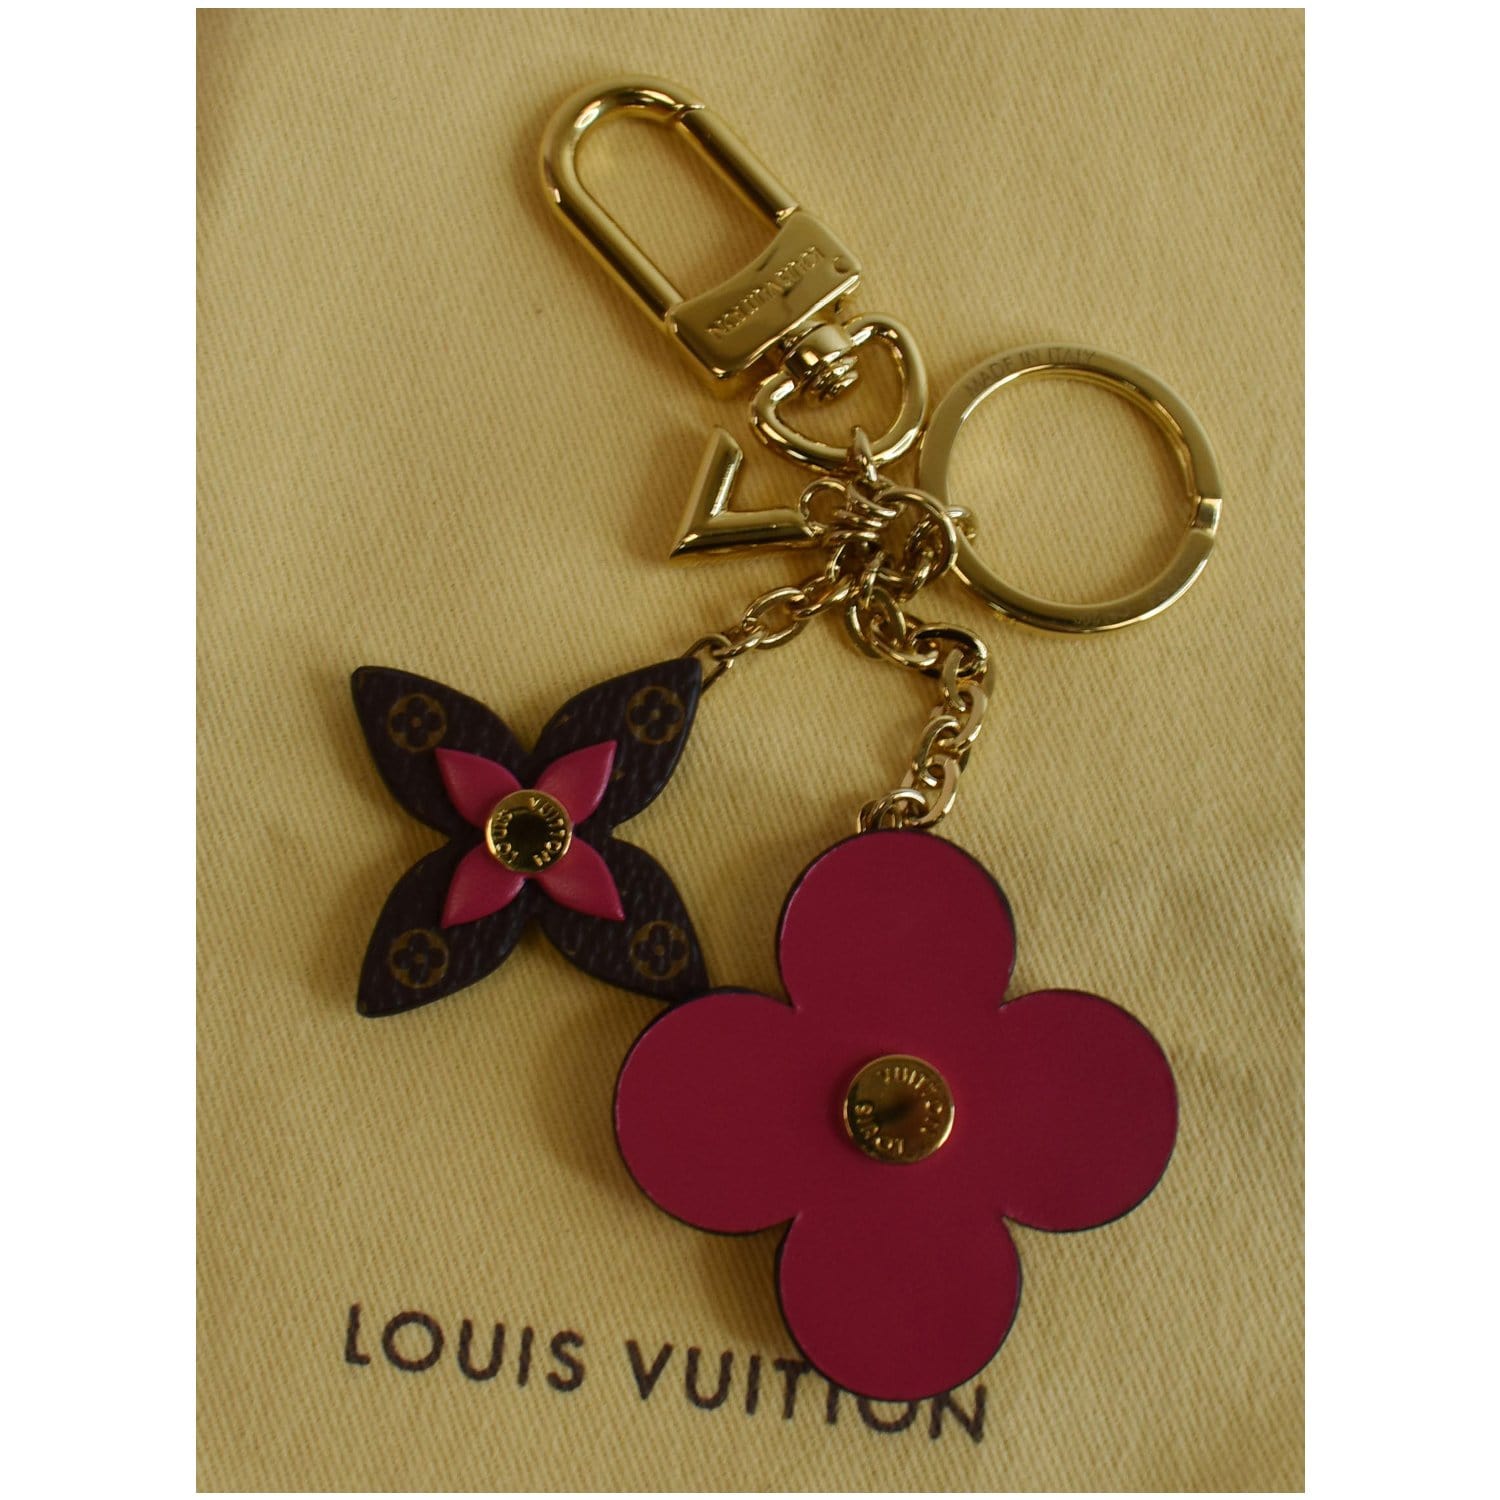 Louis Vuitton Blooming Flowers Bag Charm